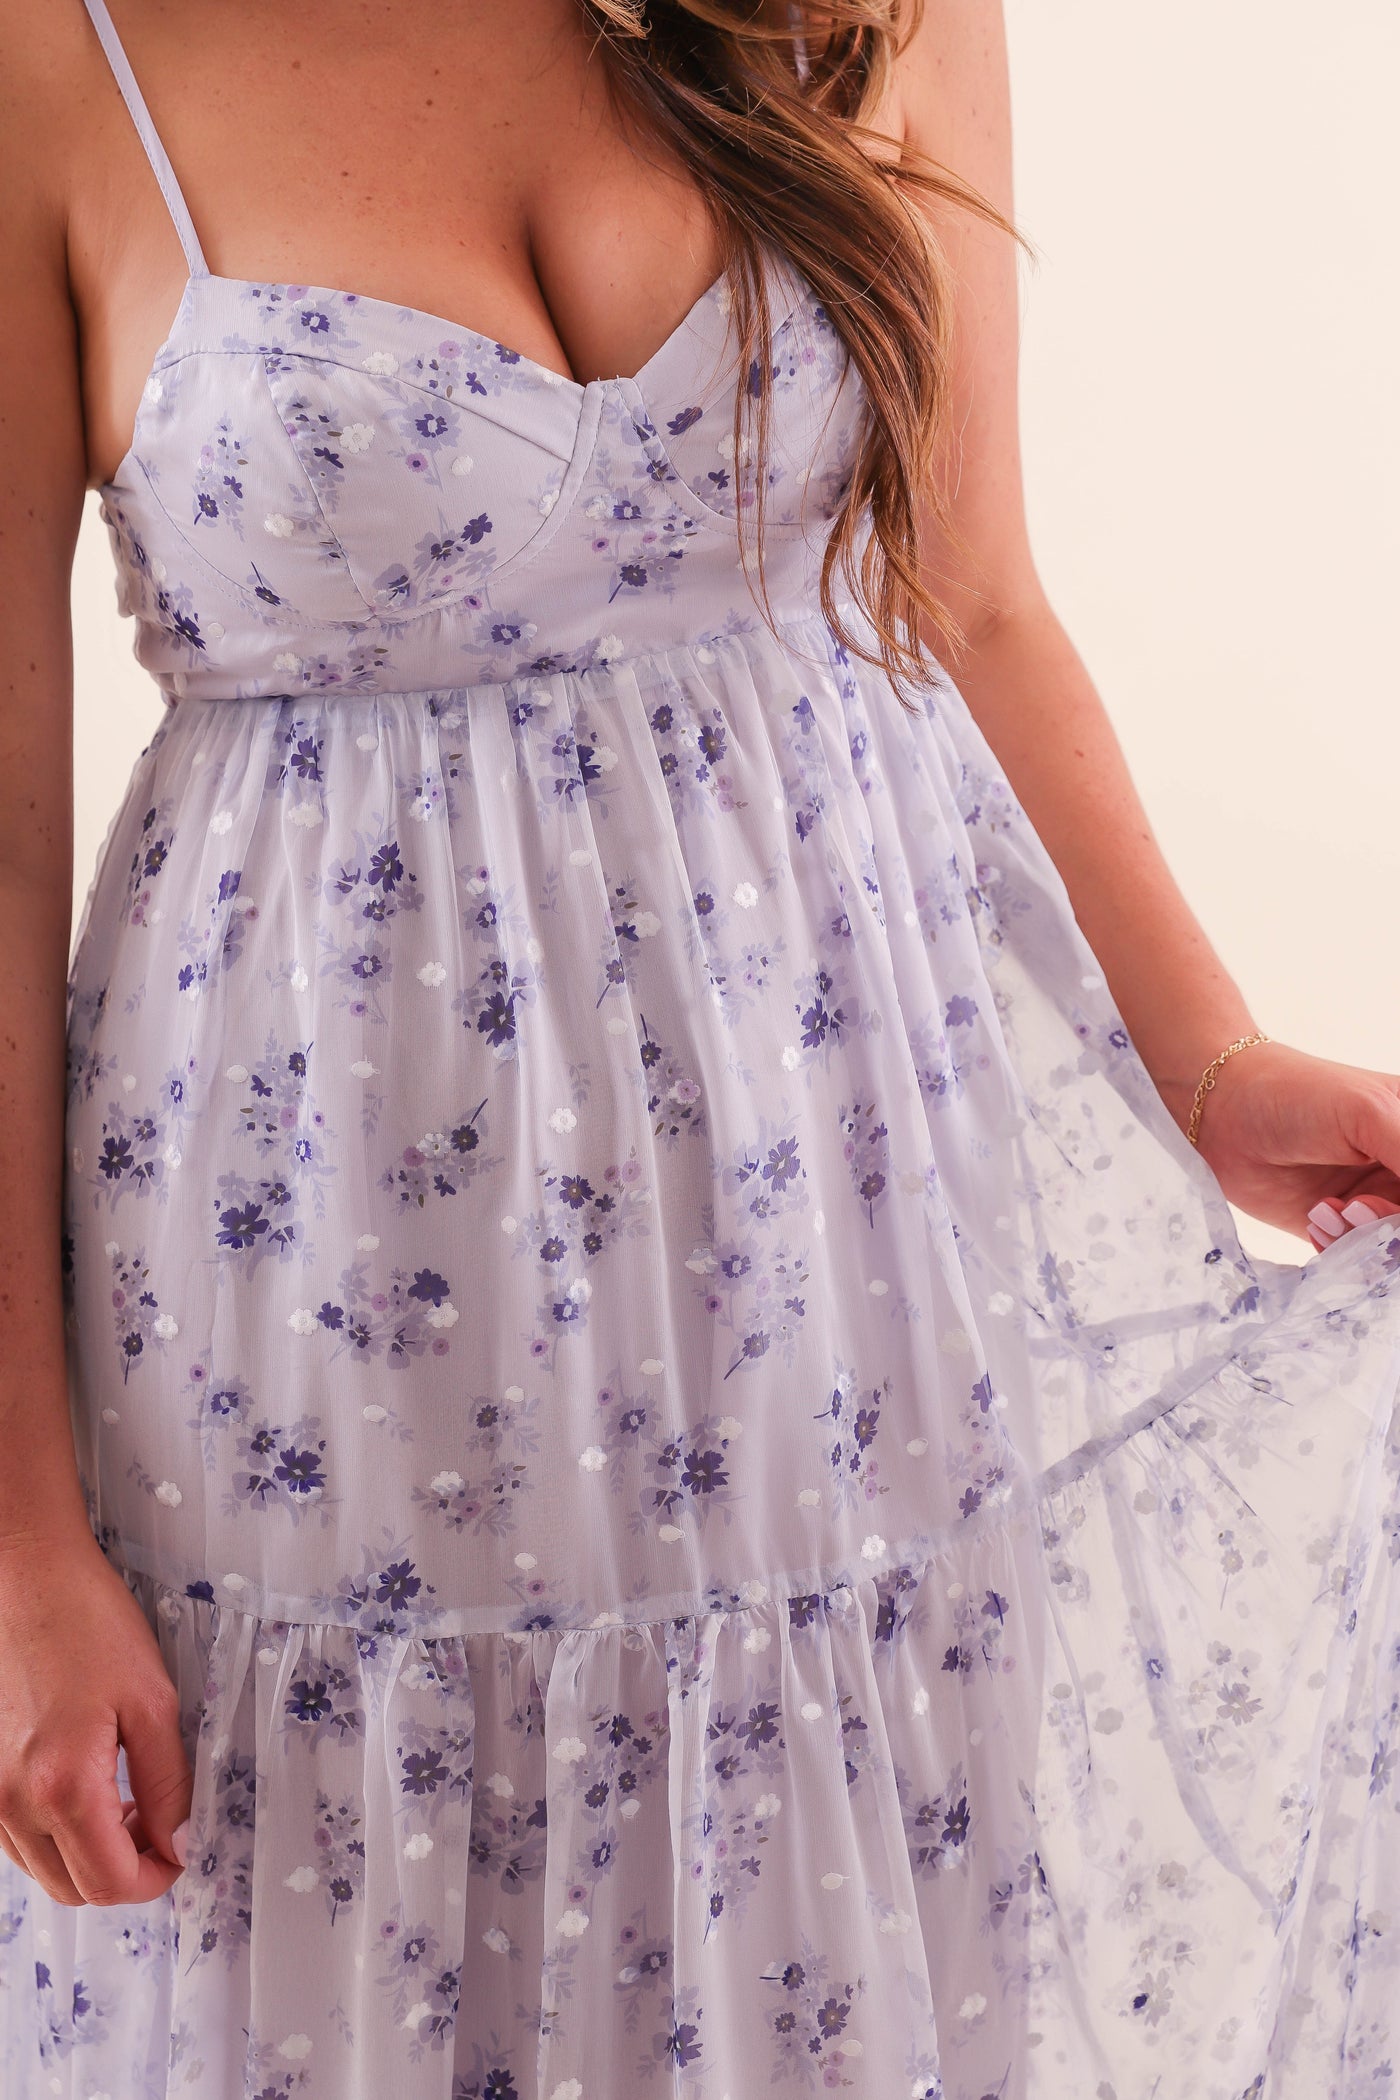 Floral Print Tulle Maxi Dress- Wedding Guest Maxi Dress- Storia Maxi Dress